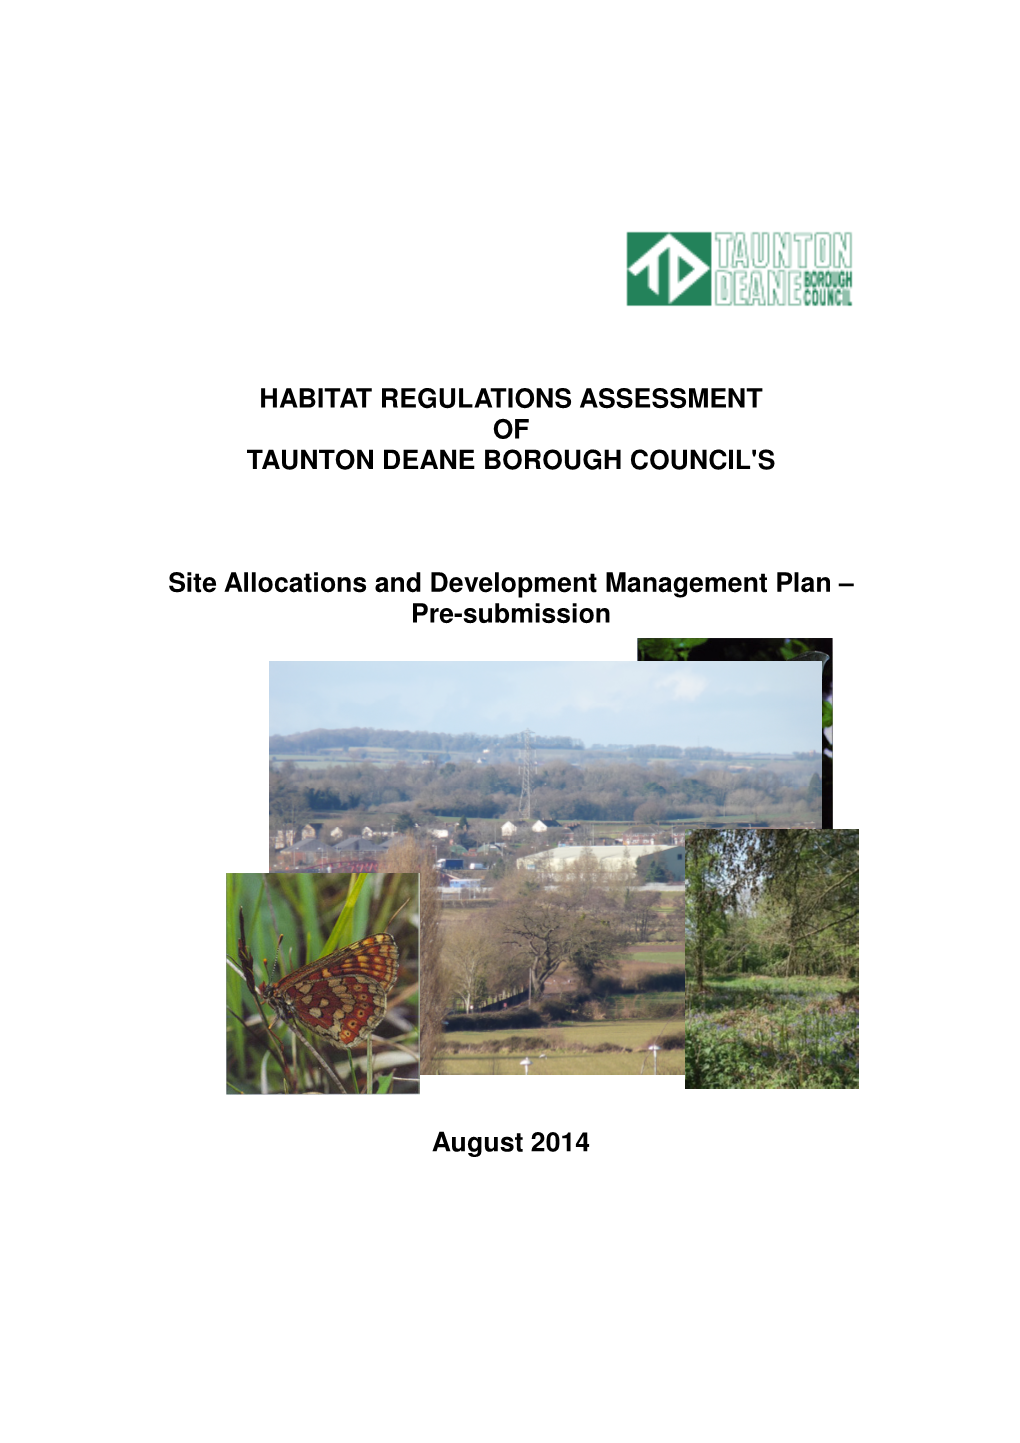 Habitat Regulations Assessment of Taunton Deane Borough Council's